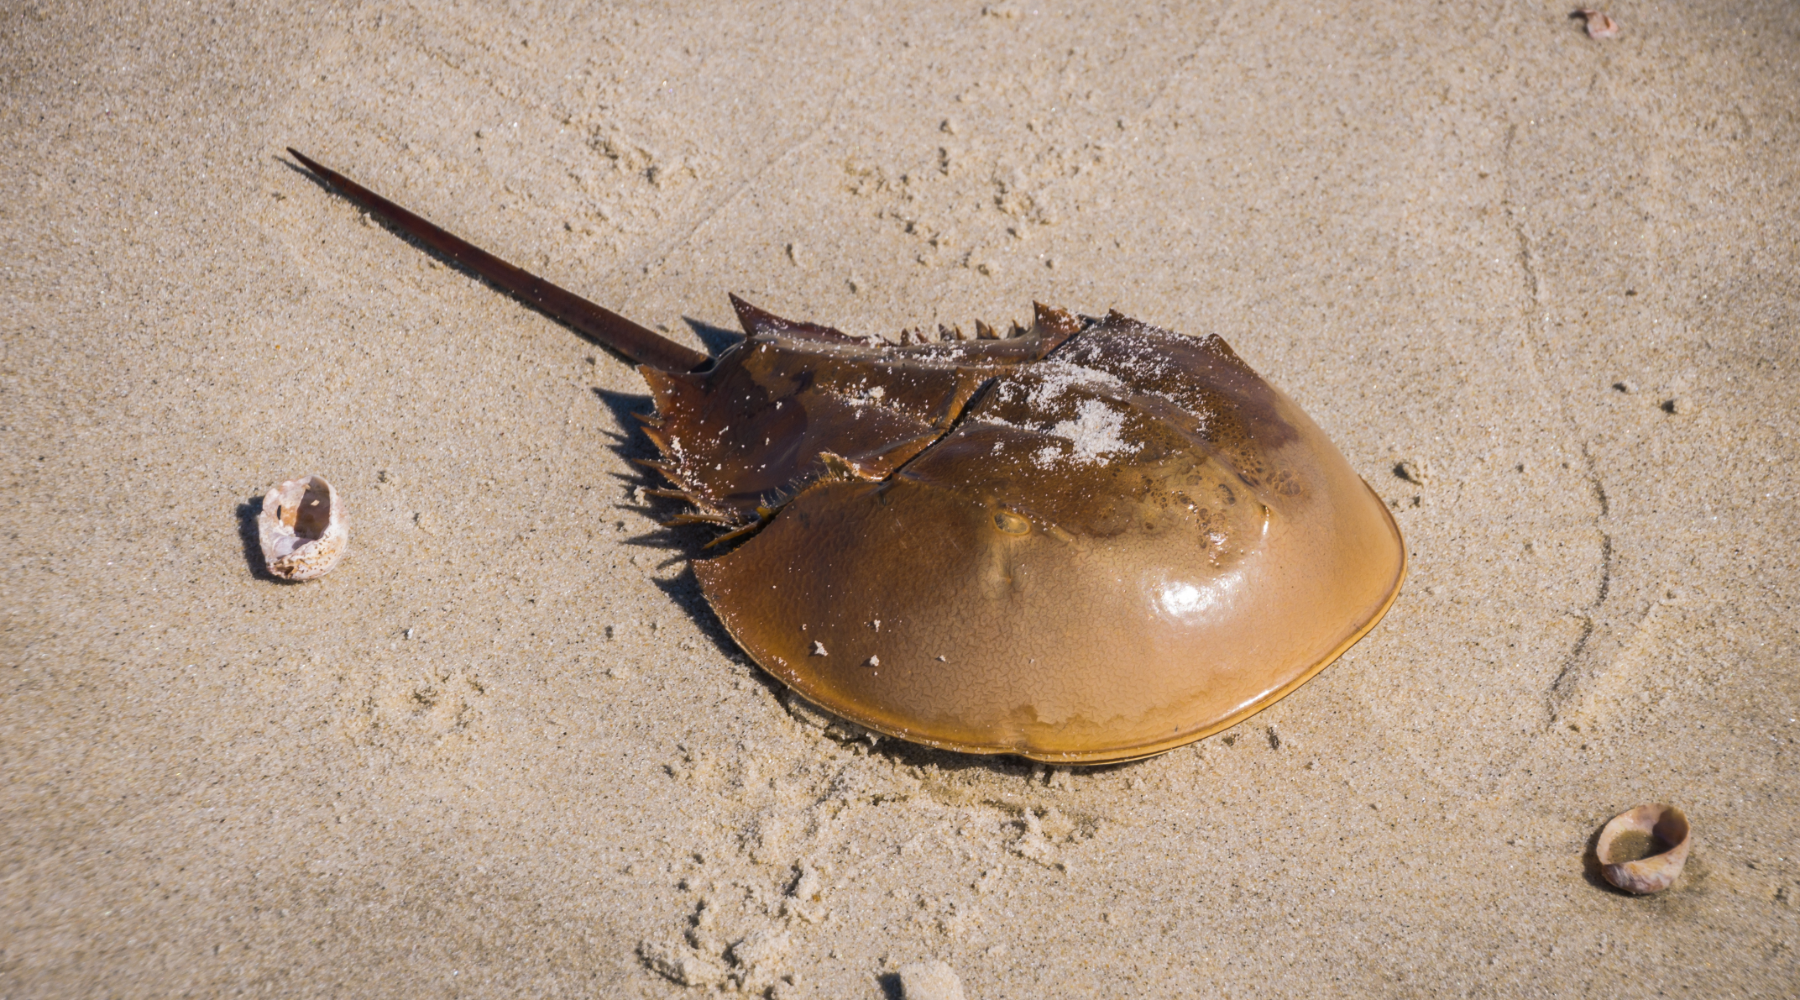 Atlantic Horseshoe Crab on the sand